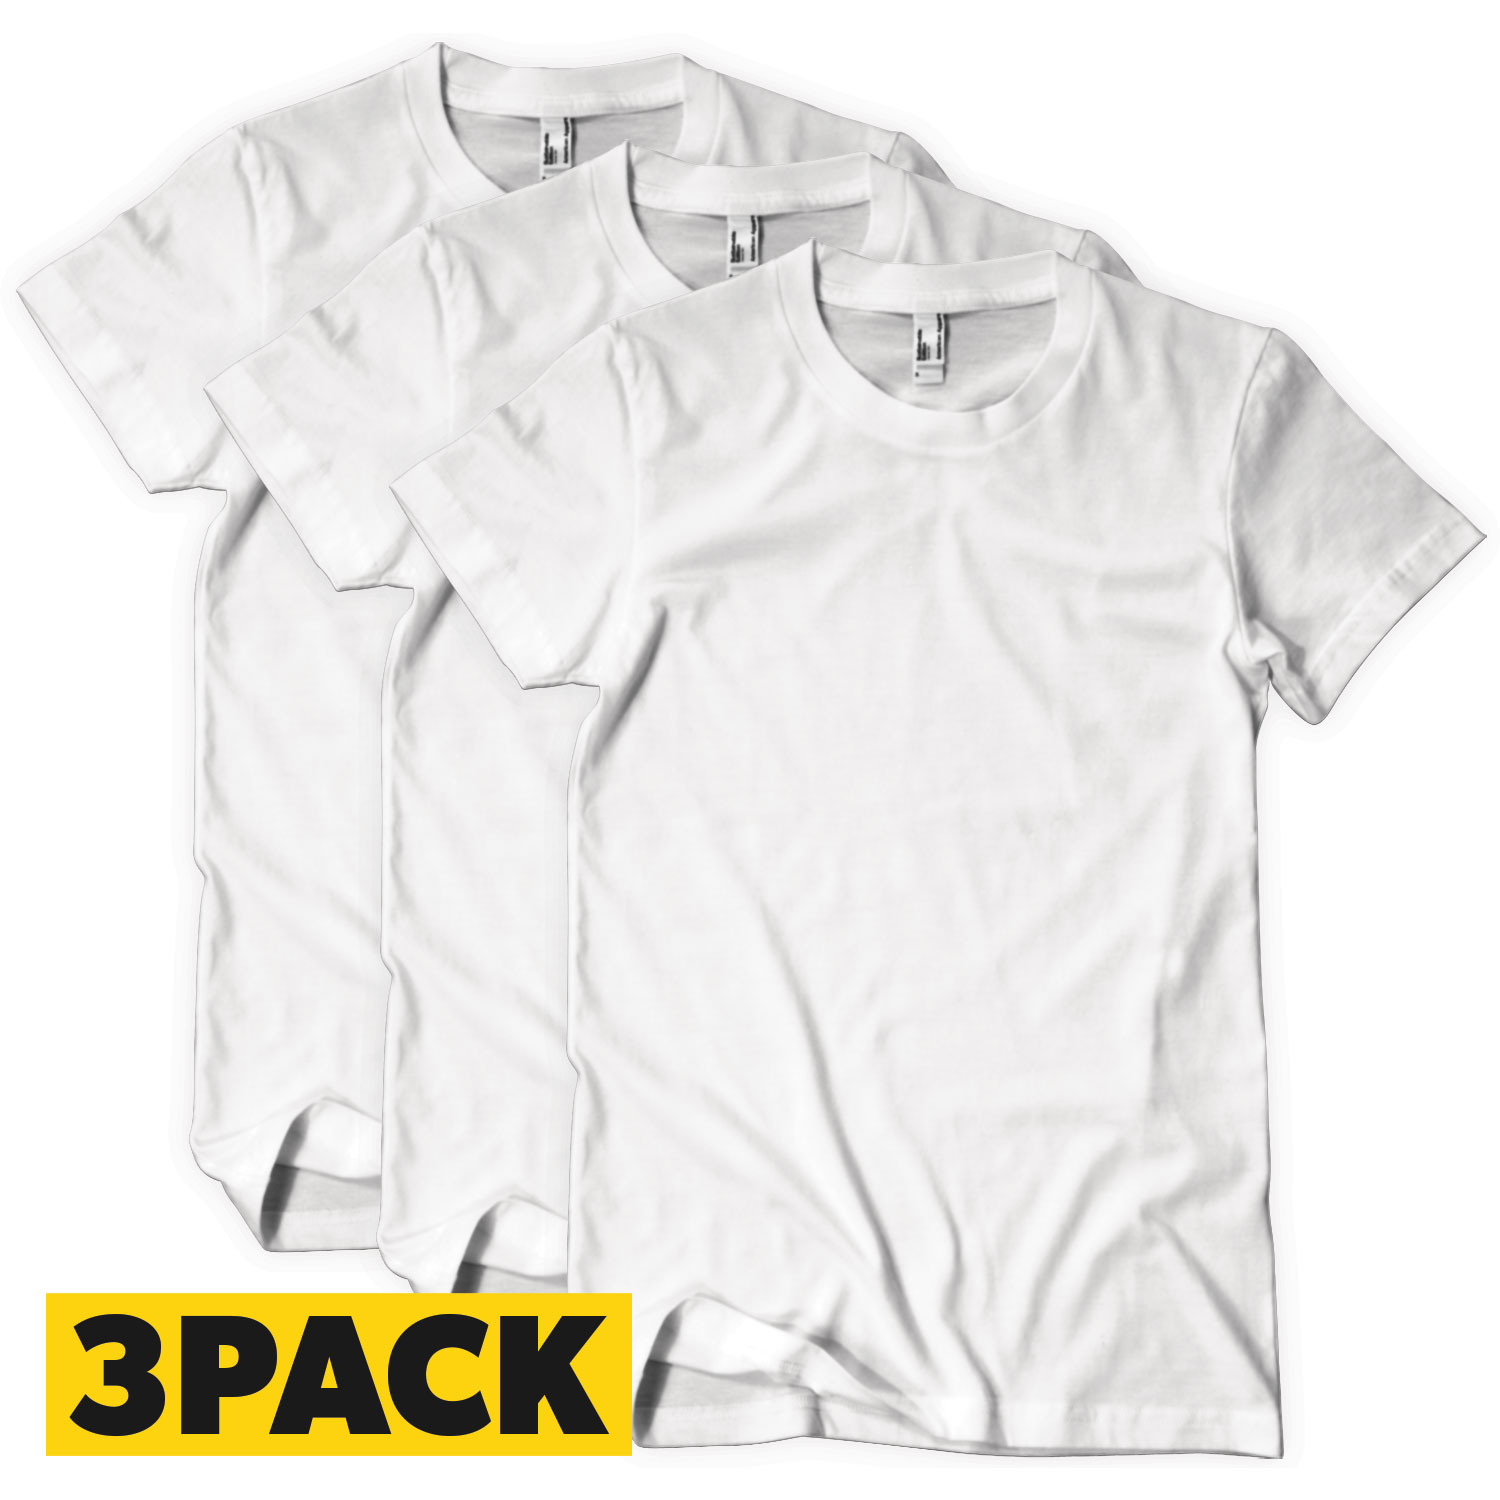 T-Shirts Bigpack Vit - 3 pack